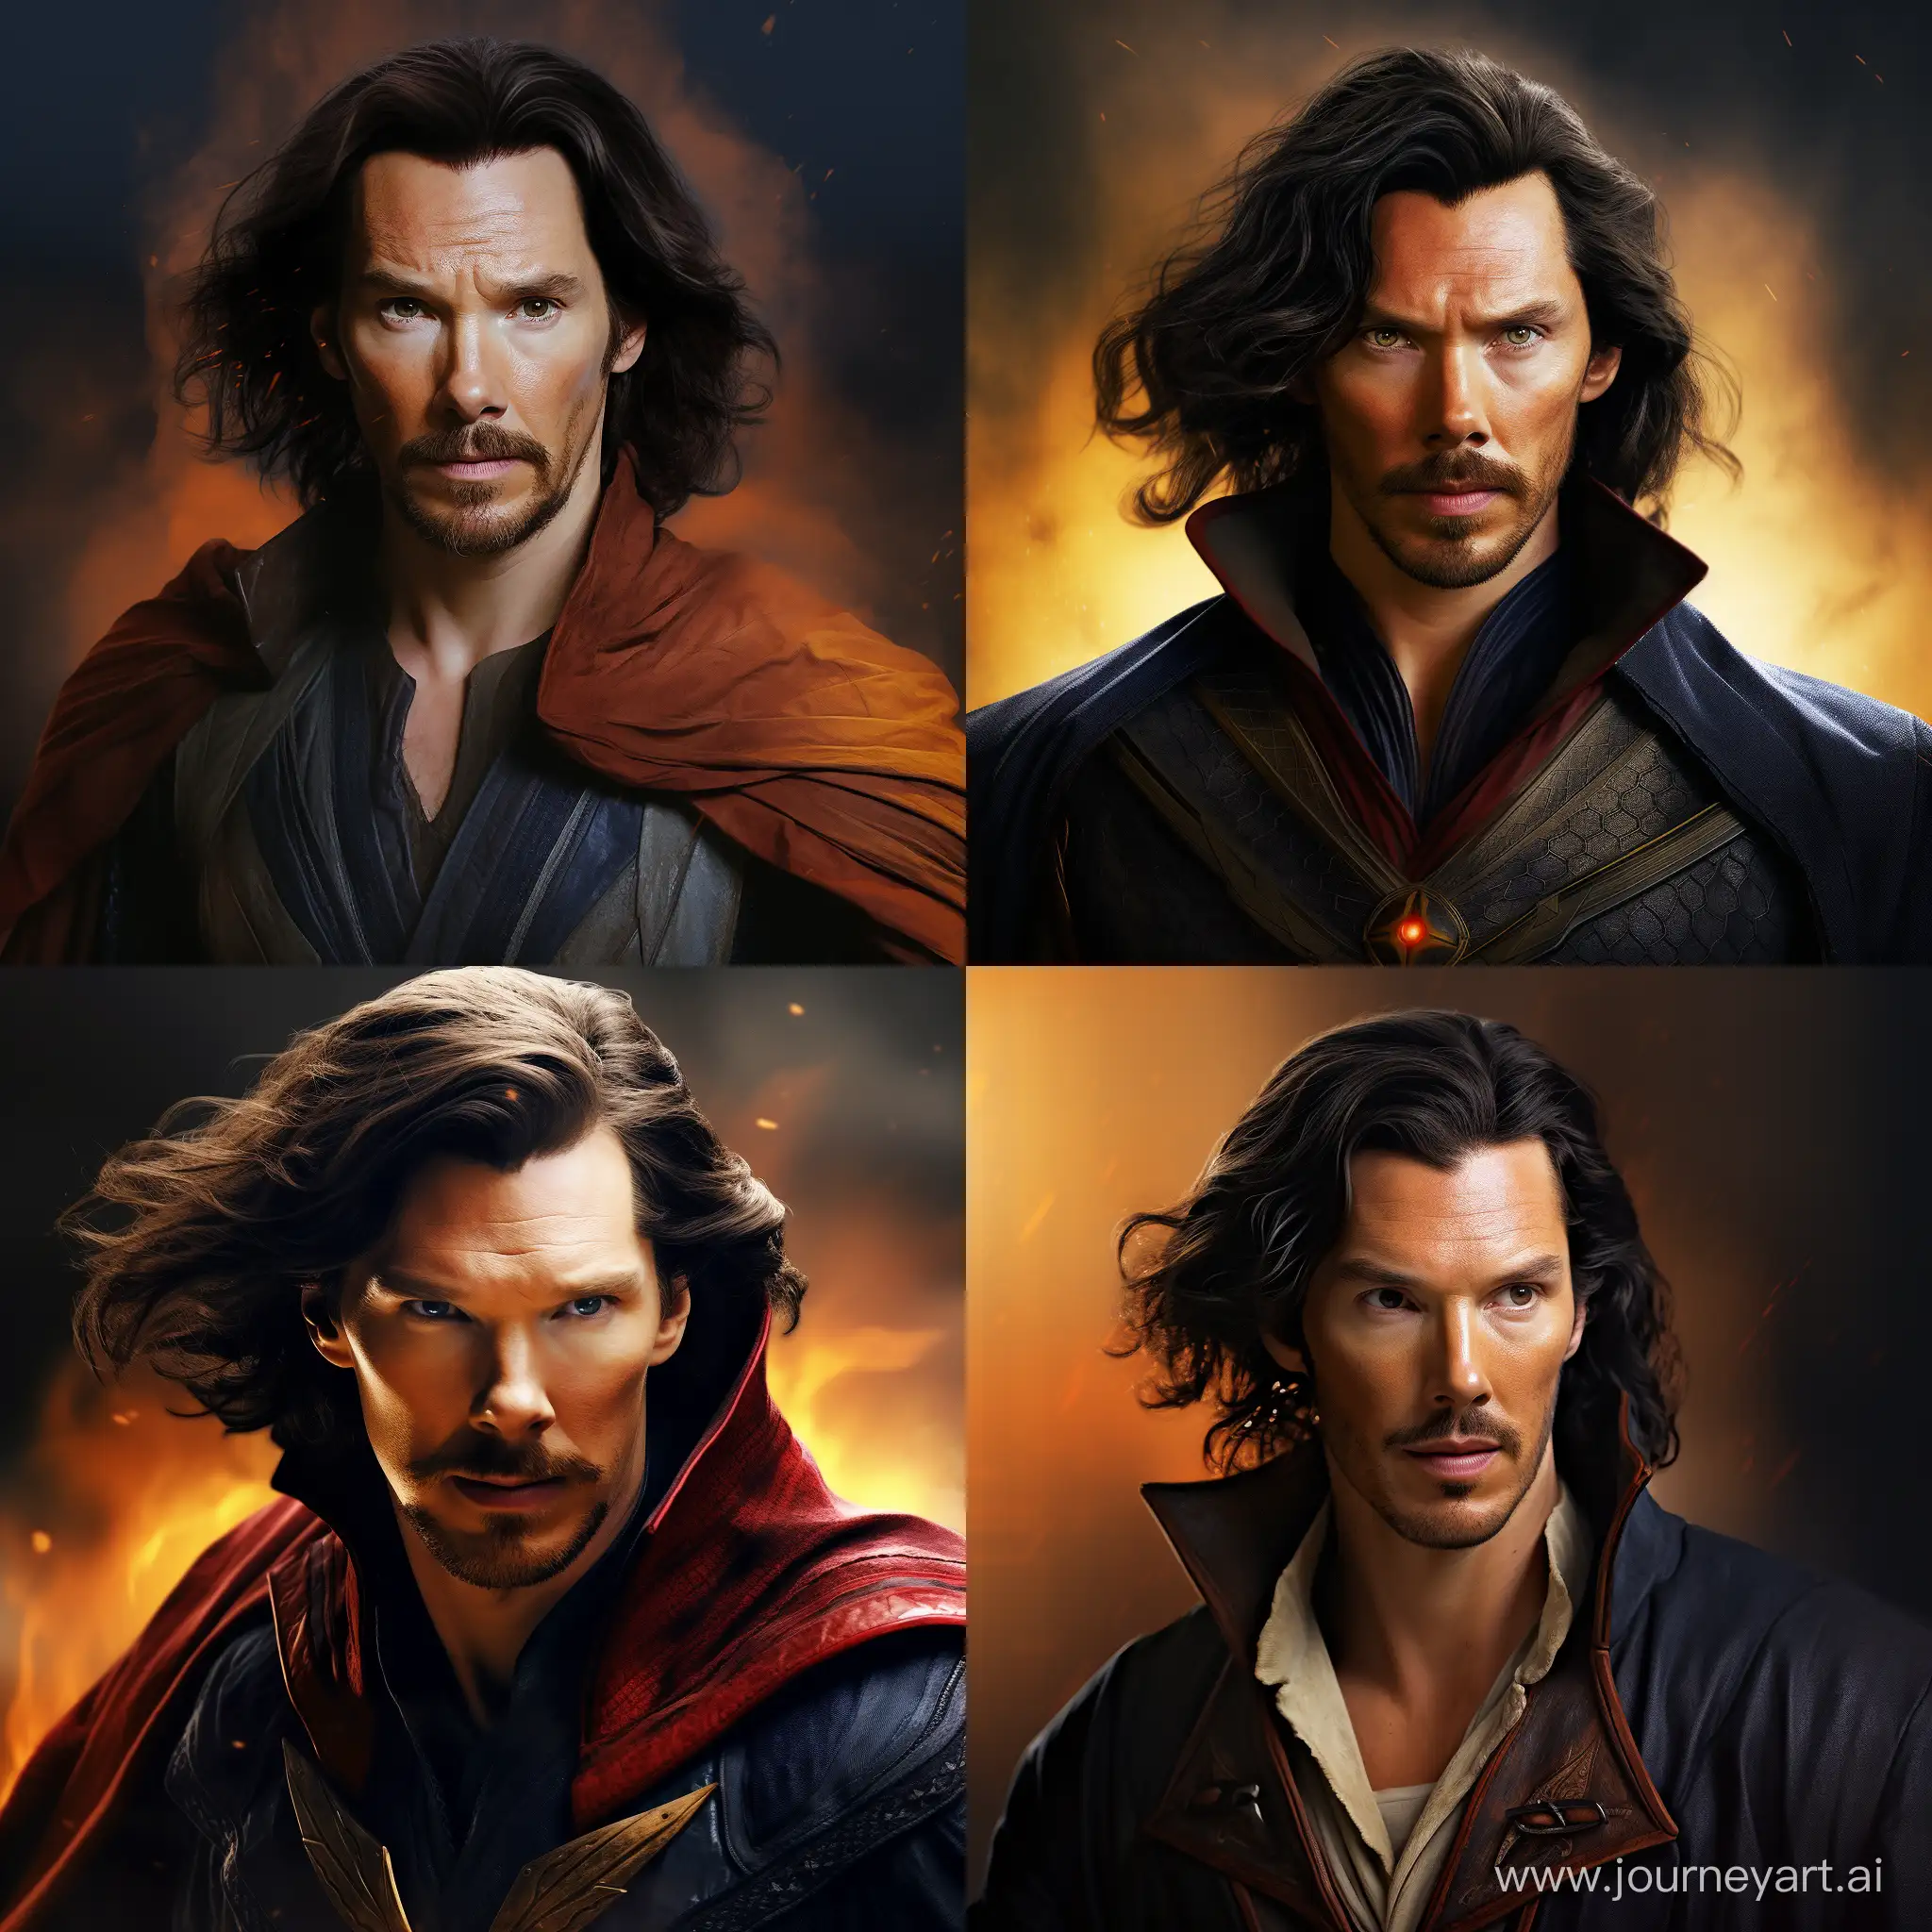 Benedict-Cumberbatch-as-Doctor-Strange-with-Long-Hair